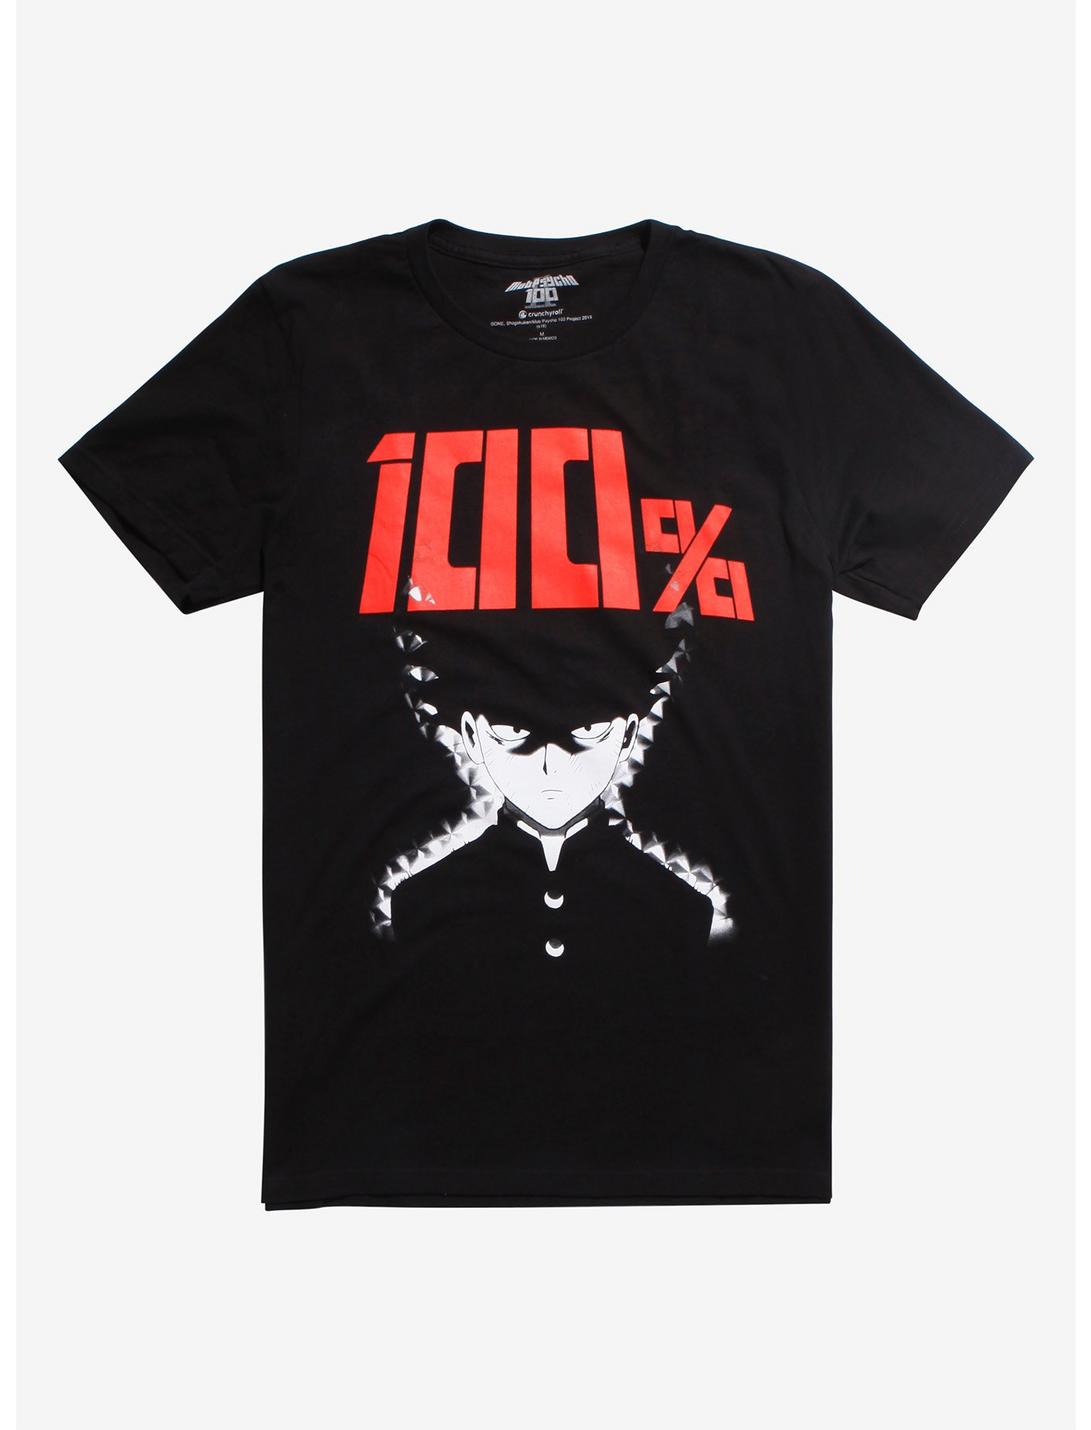 Mob Psycho 100 Power Level 100% T-Shirt, RED, hi-res